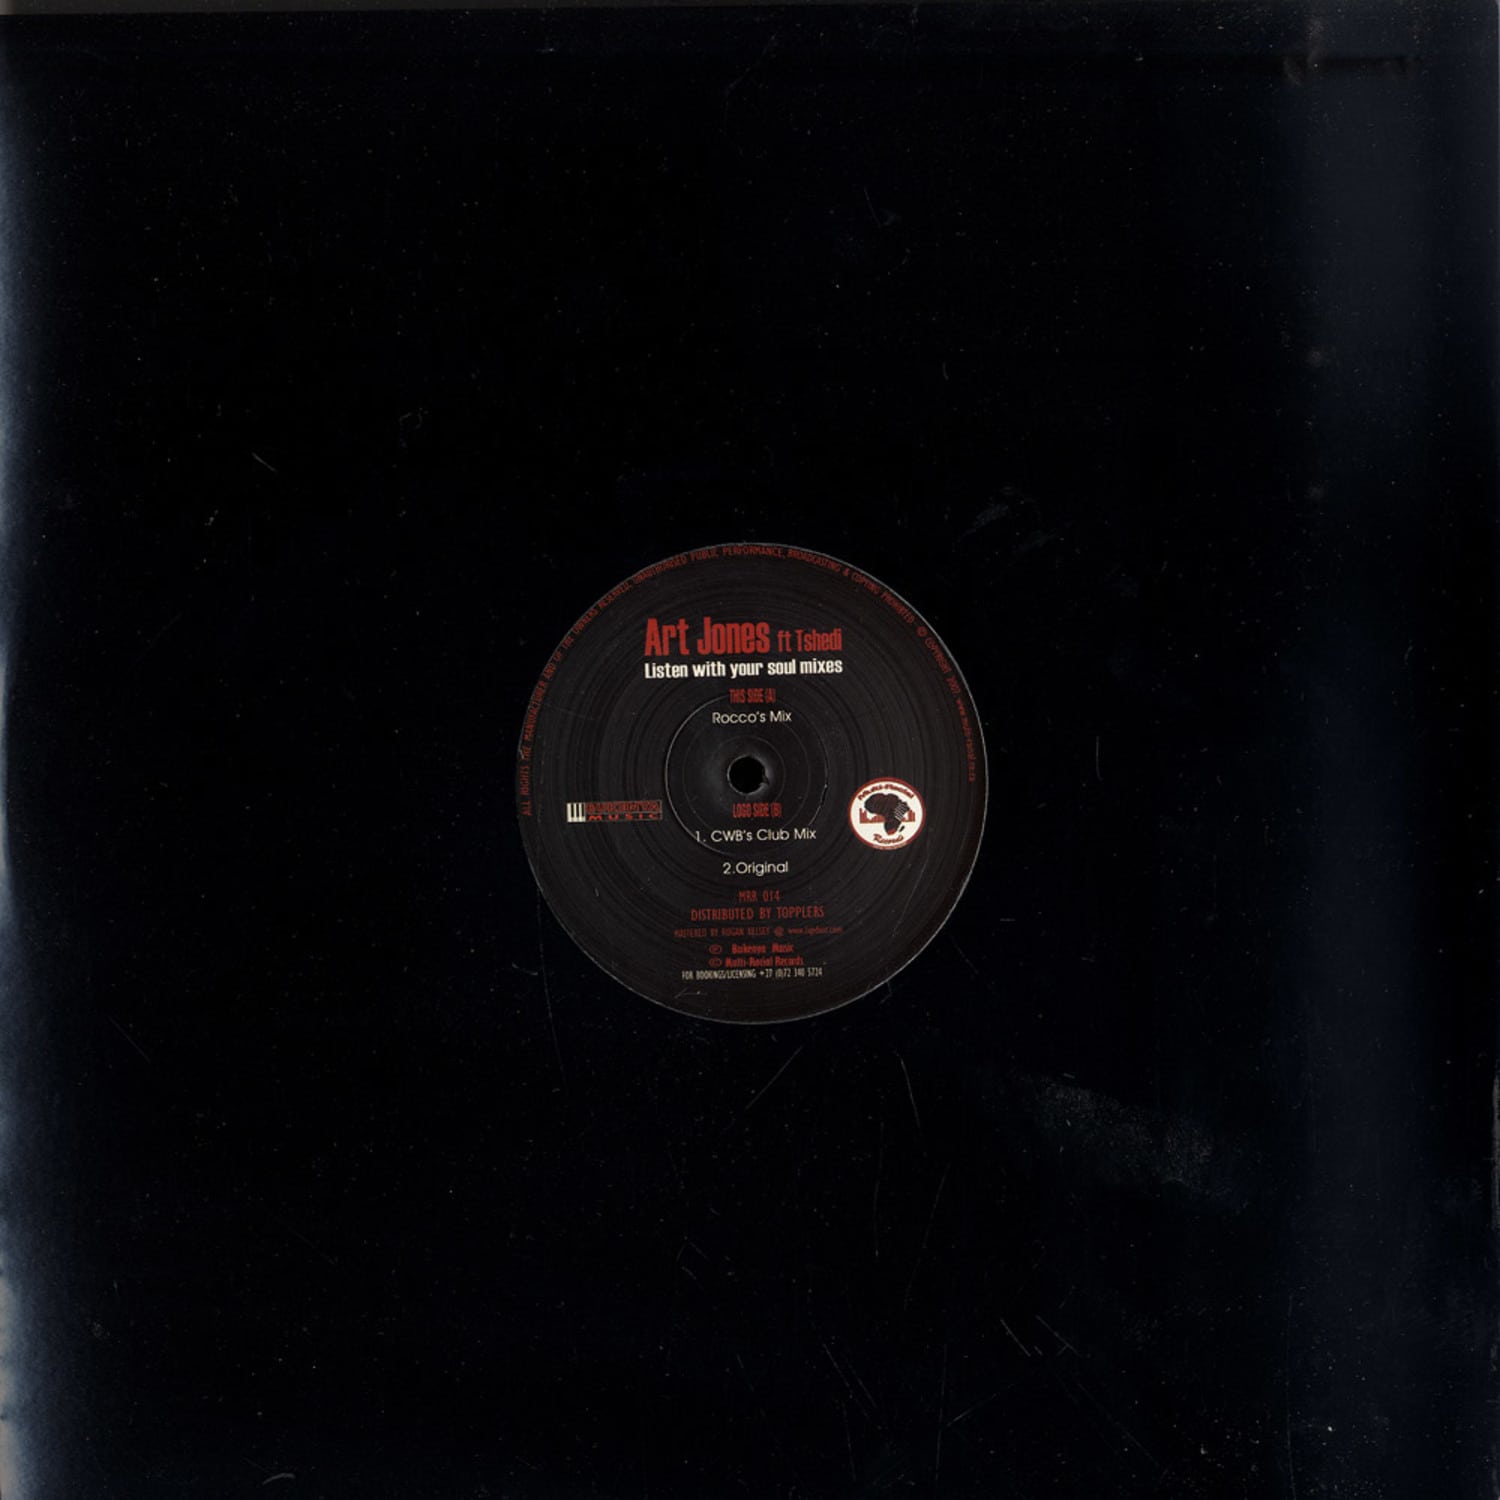 Art Jones feat Tshedi - LISTEN WITH YOUR SOUL - ROCCO REMIX